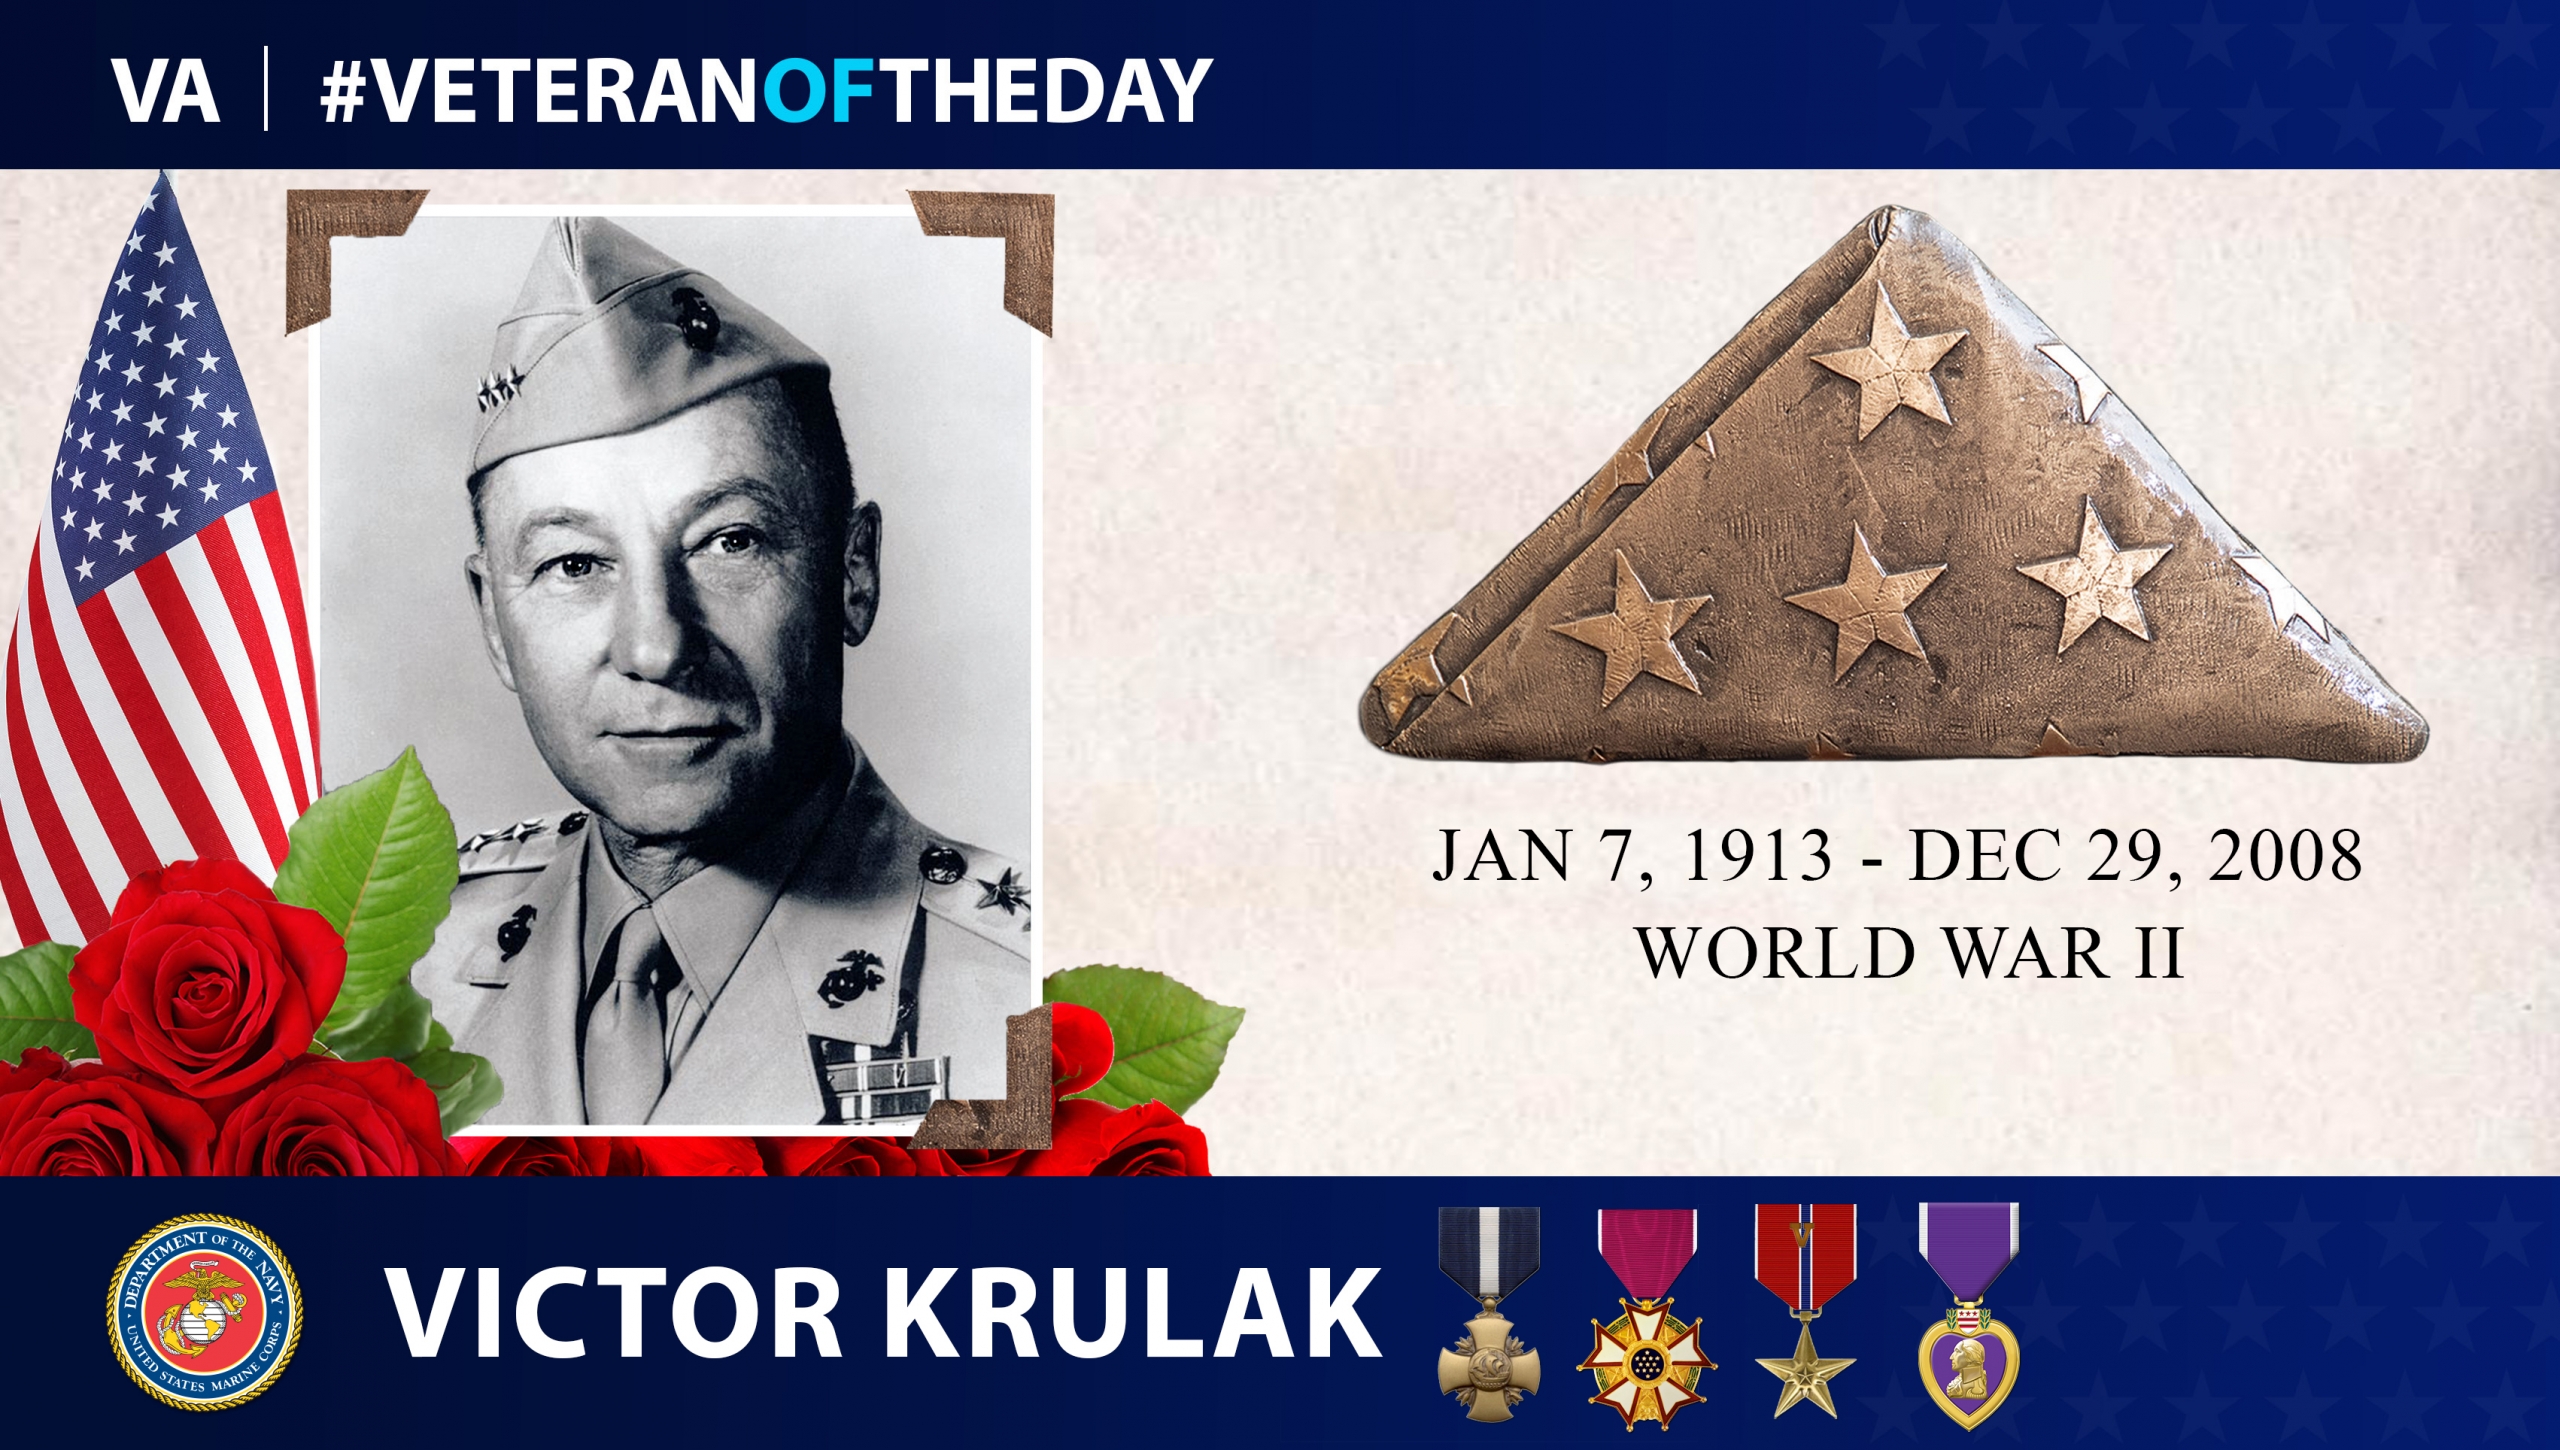 Veteranoftheday Marine Corps Veteran Victor “brute” Harold Krulak Va